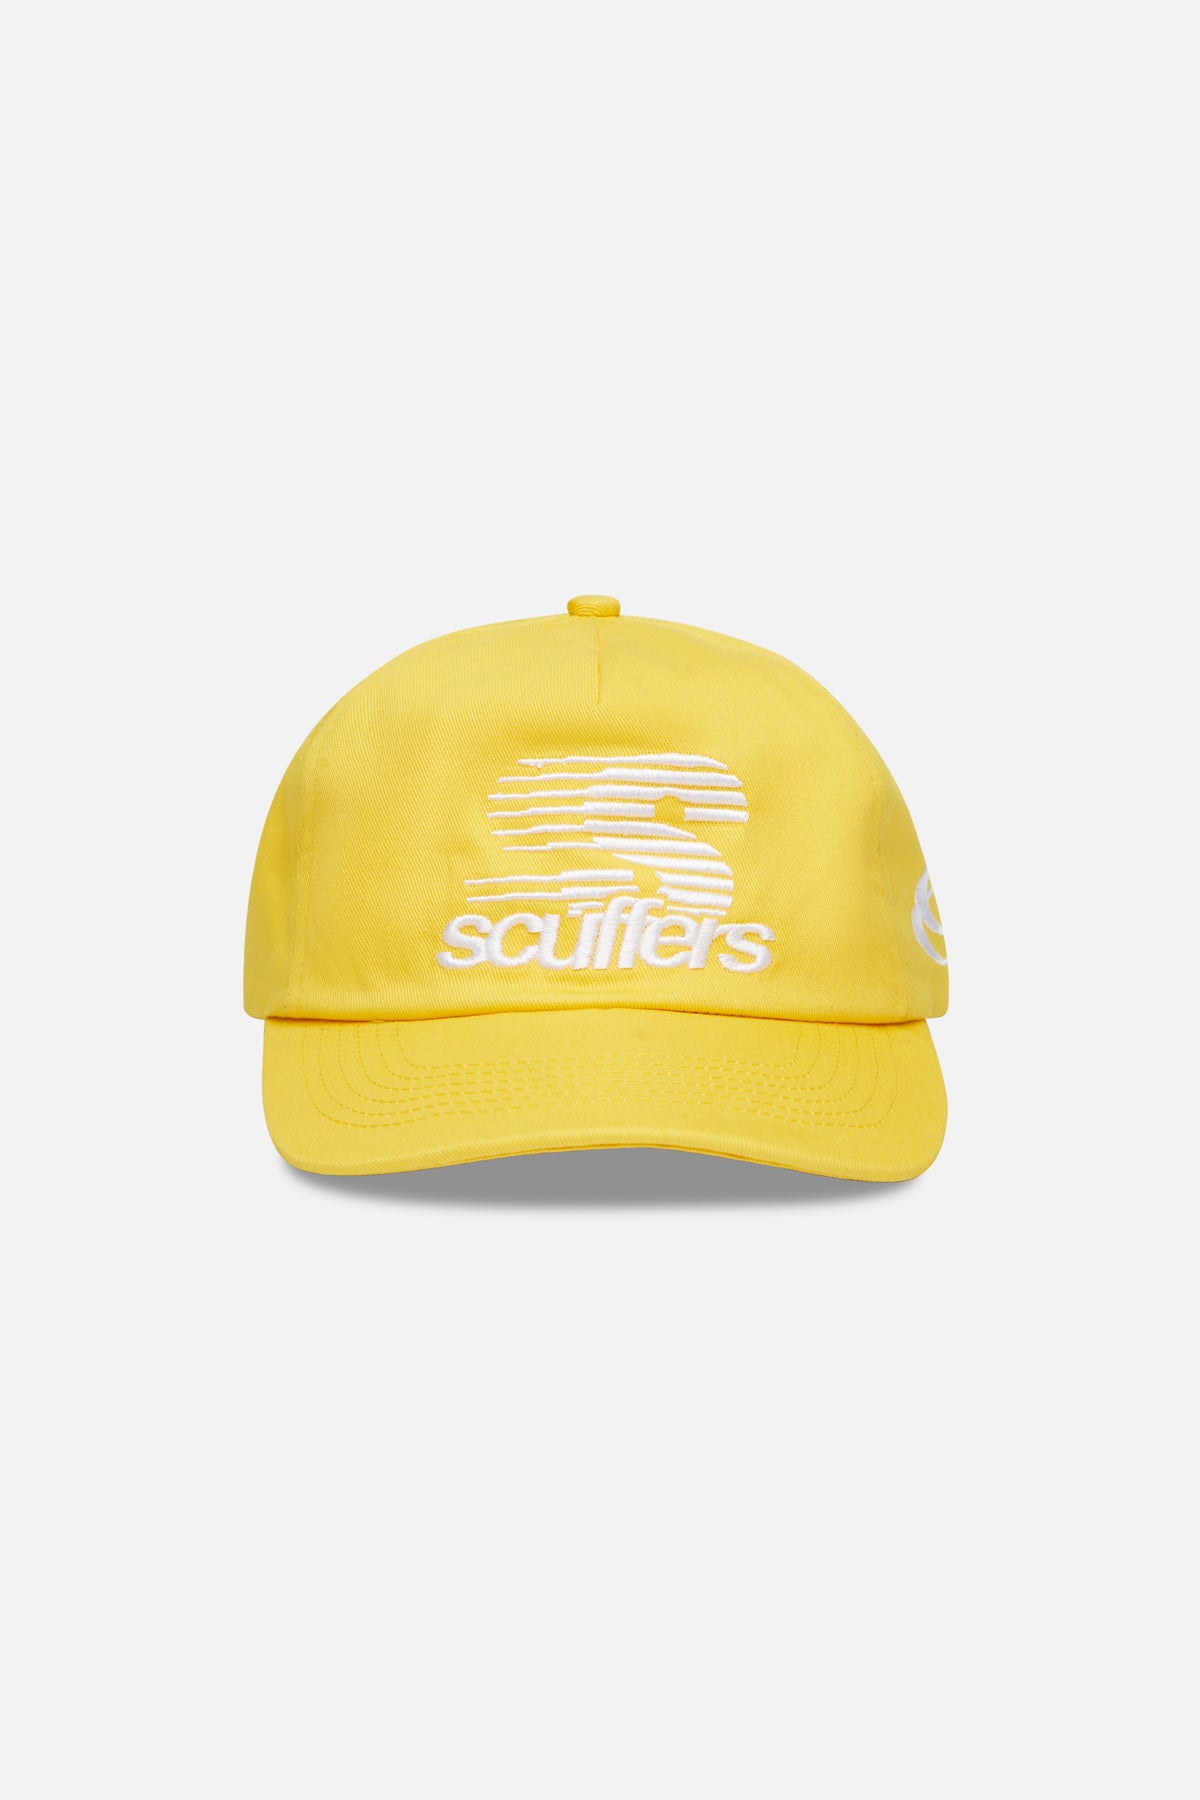 Fuzzy Yellow Cap – Scuffers